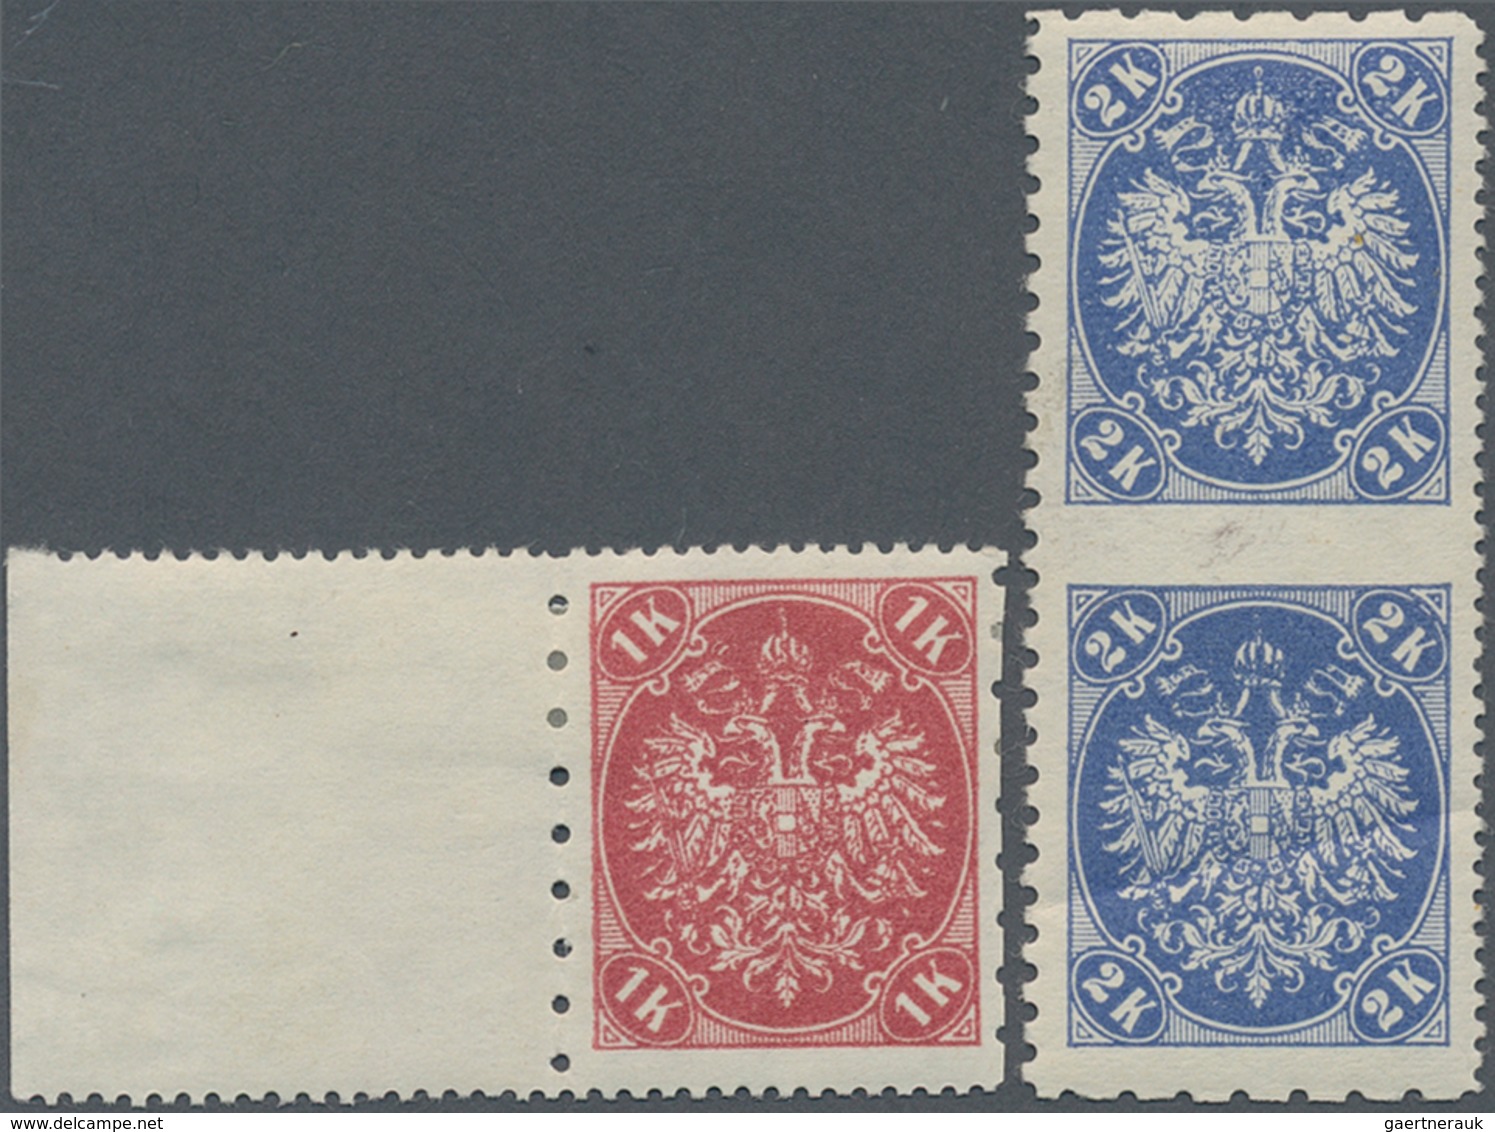 Bosnien Und Herzegowina: 1900, Definitives "Double Eagle", 1kr. Rose And 2 Kr. Ultramarine, Speciali - Bosnia Herzegovina